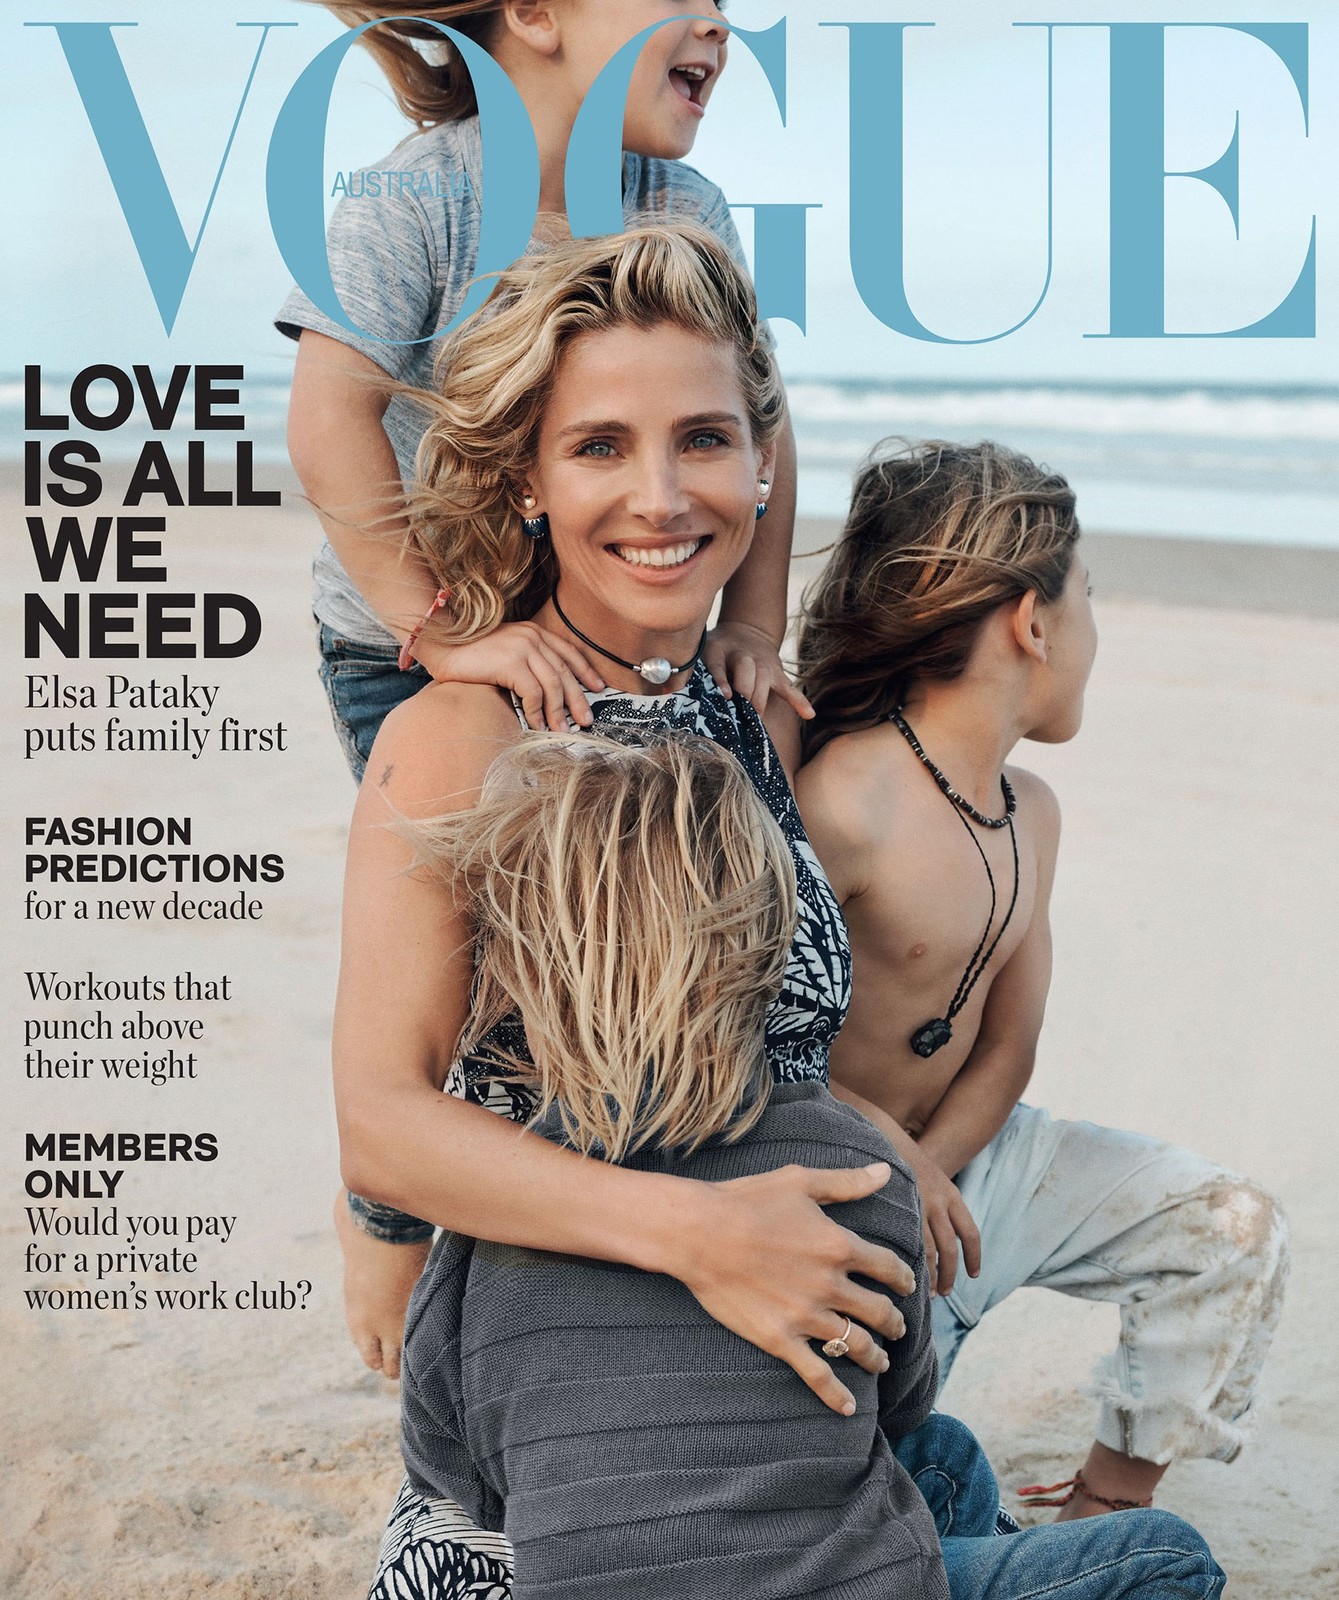 Vogue A Beautiful Life - Vogue Australia